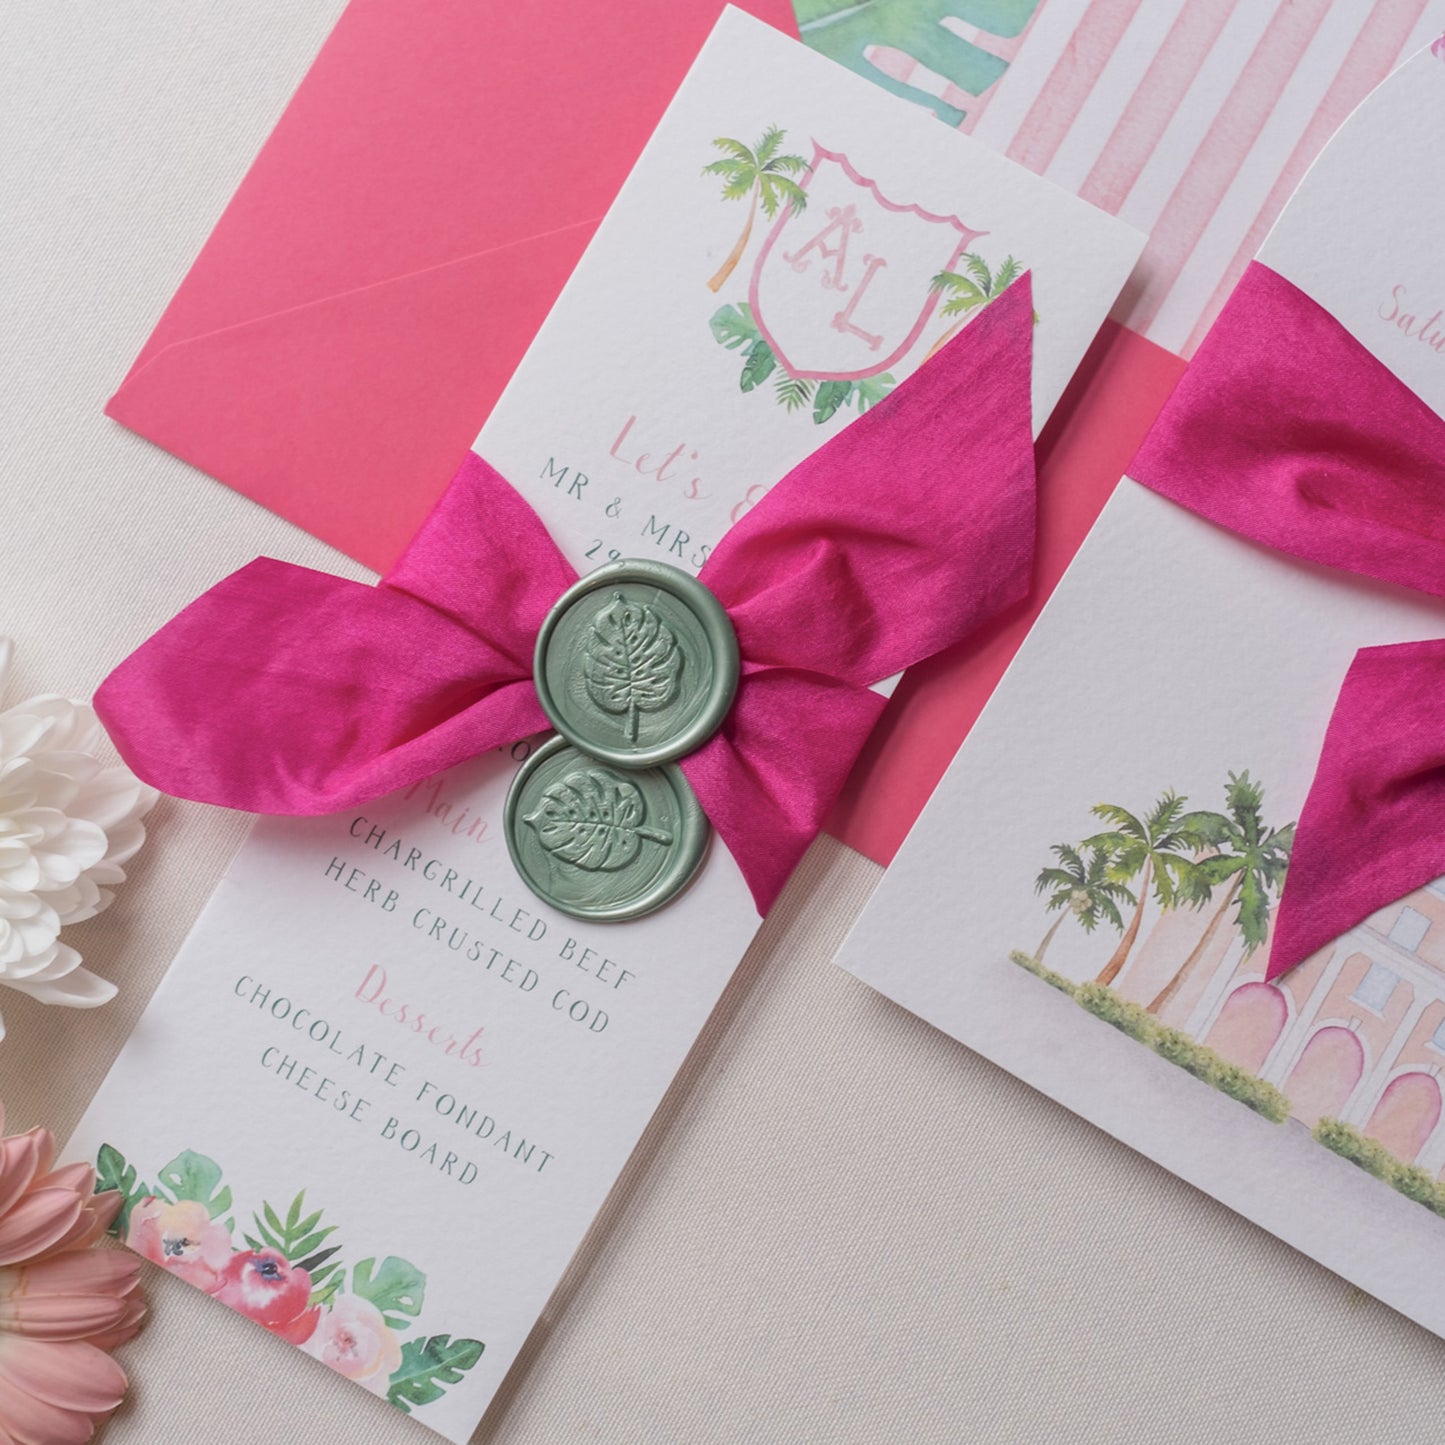 Palm Beach Wedding Menu with ribbon and wax seal